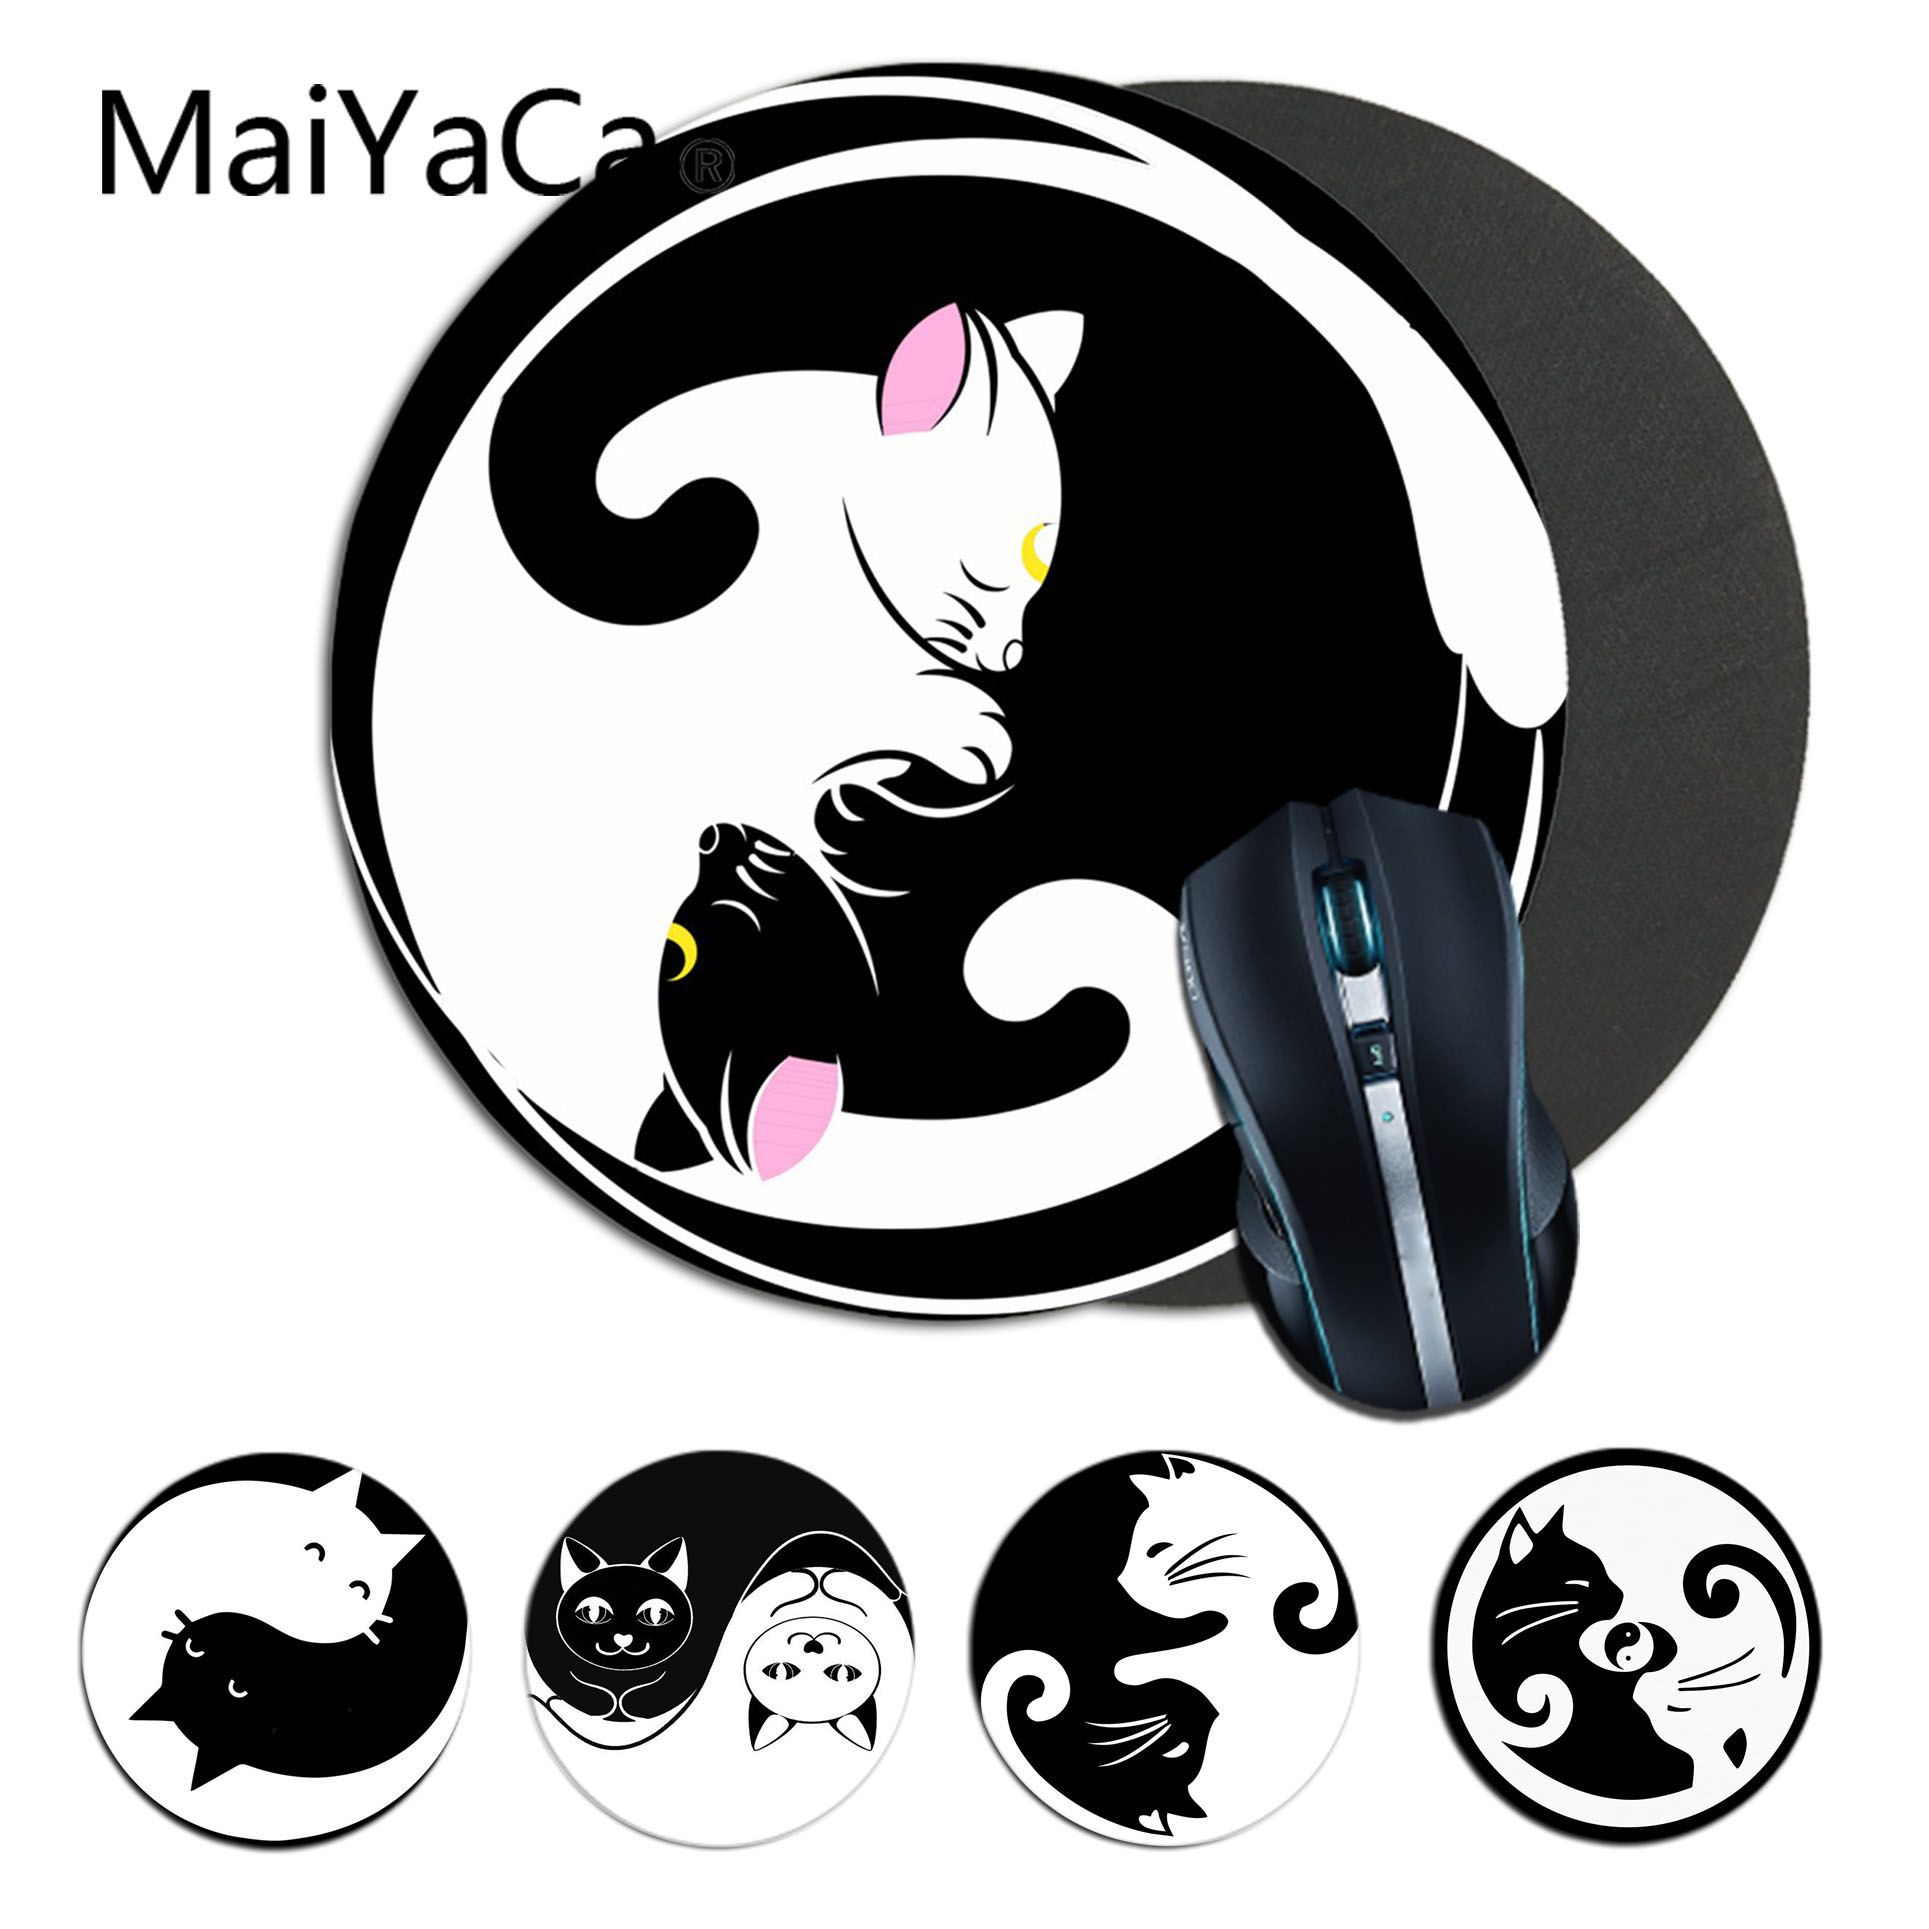 MaiYaCa Yin Yang Sailor moon cat Rubber Gaming mousepad Game Carpet Mouse Pad round mouse Mat Anti Slip anime Mousepad 22x22cm